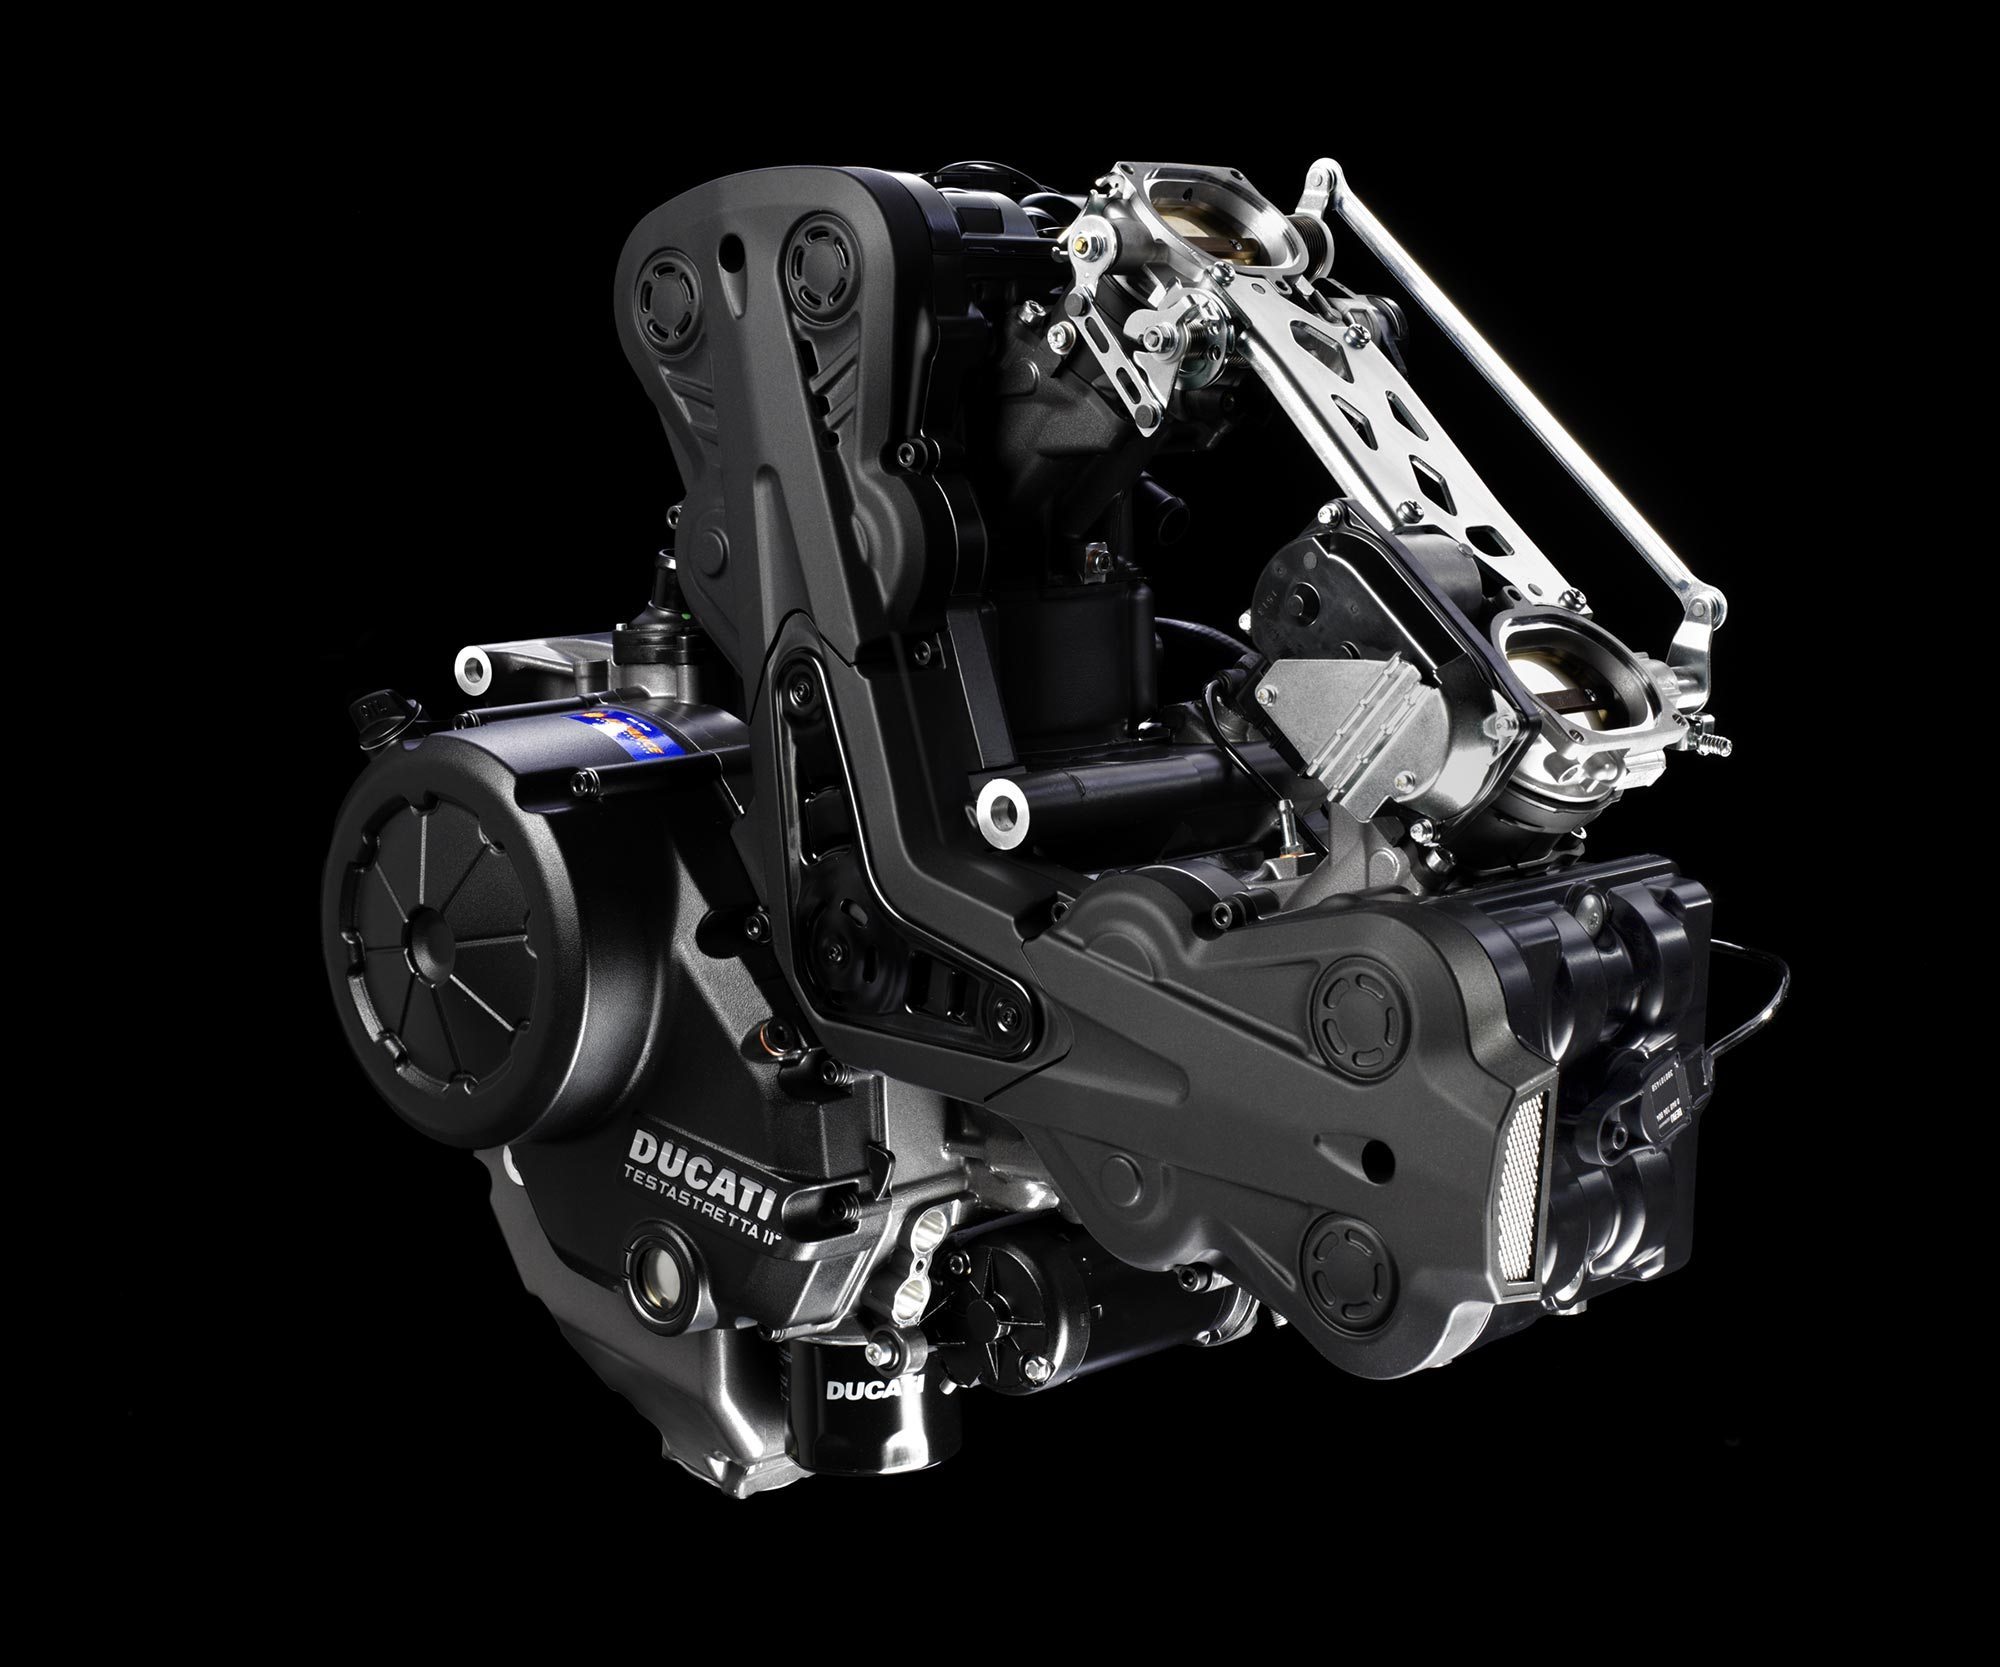 Ducati Diavel engine